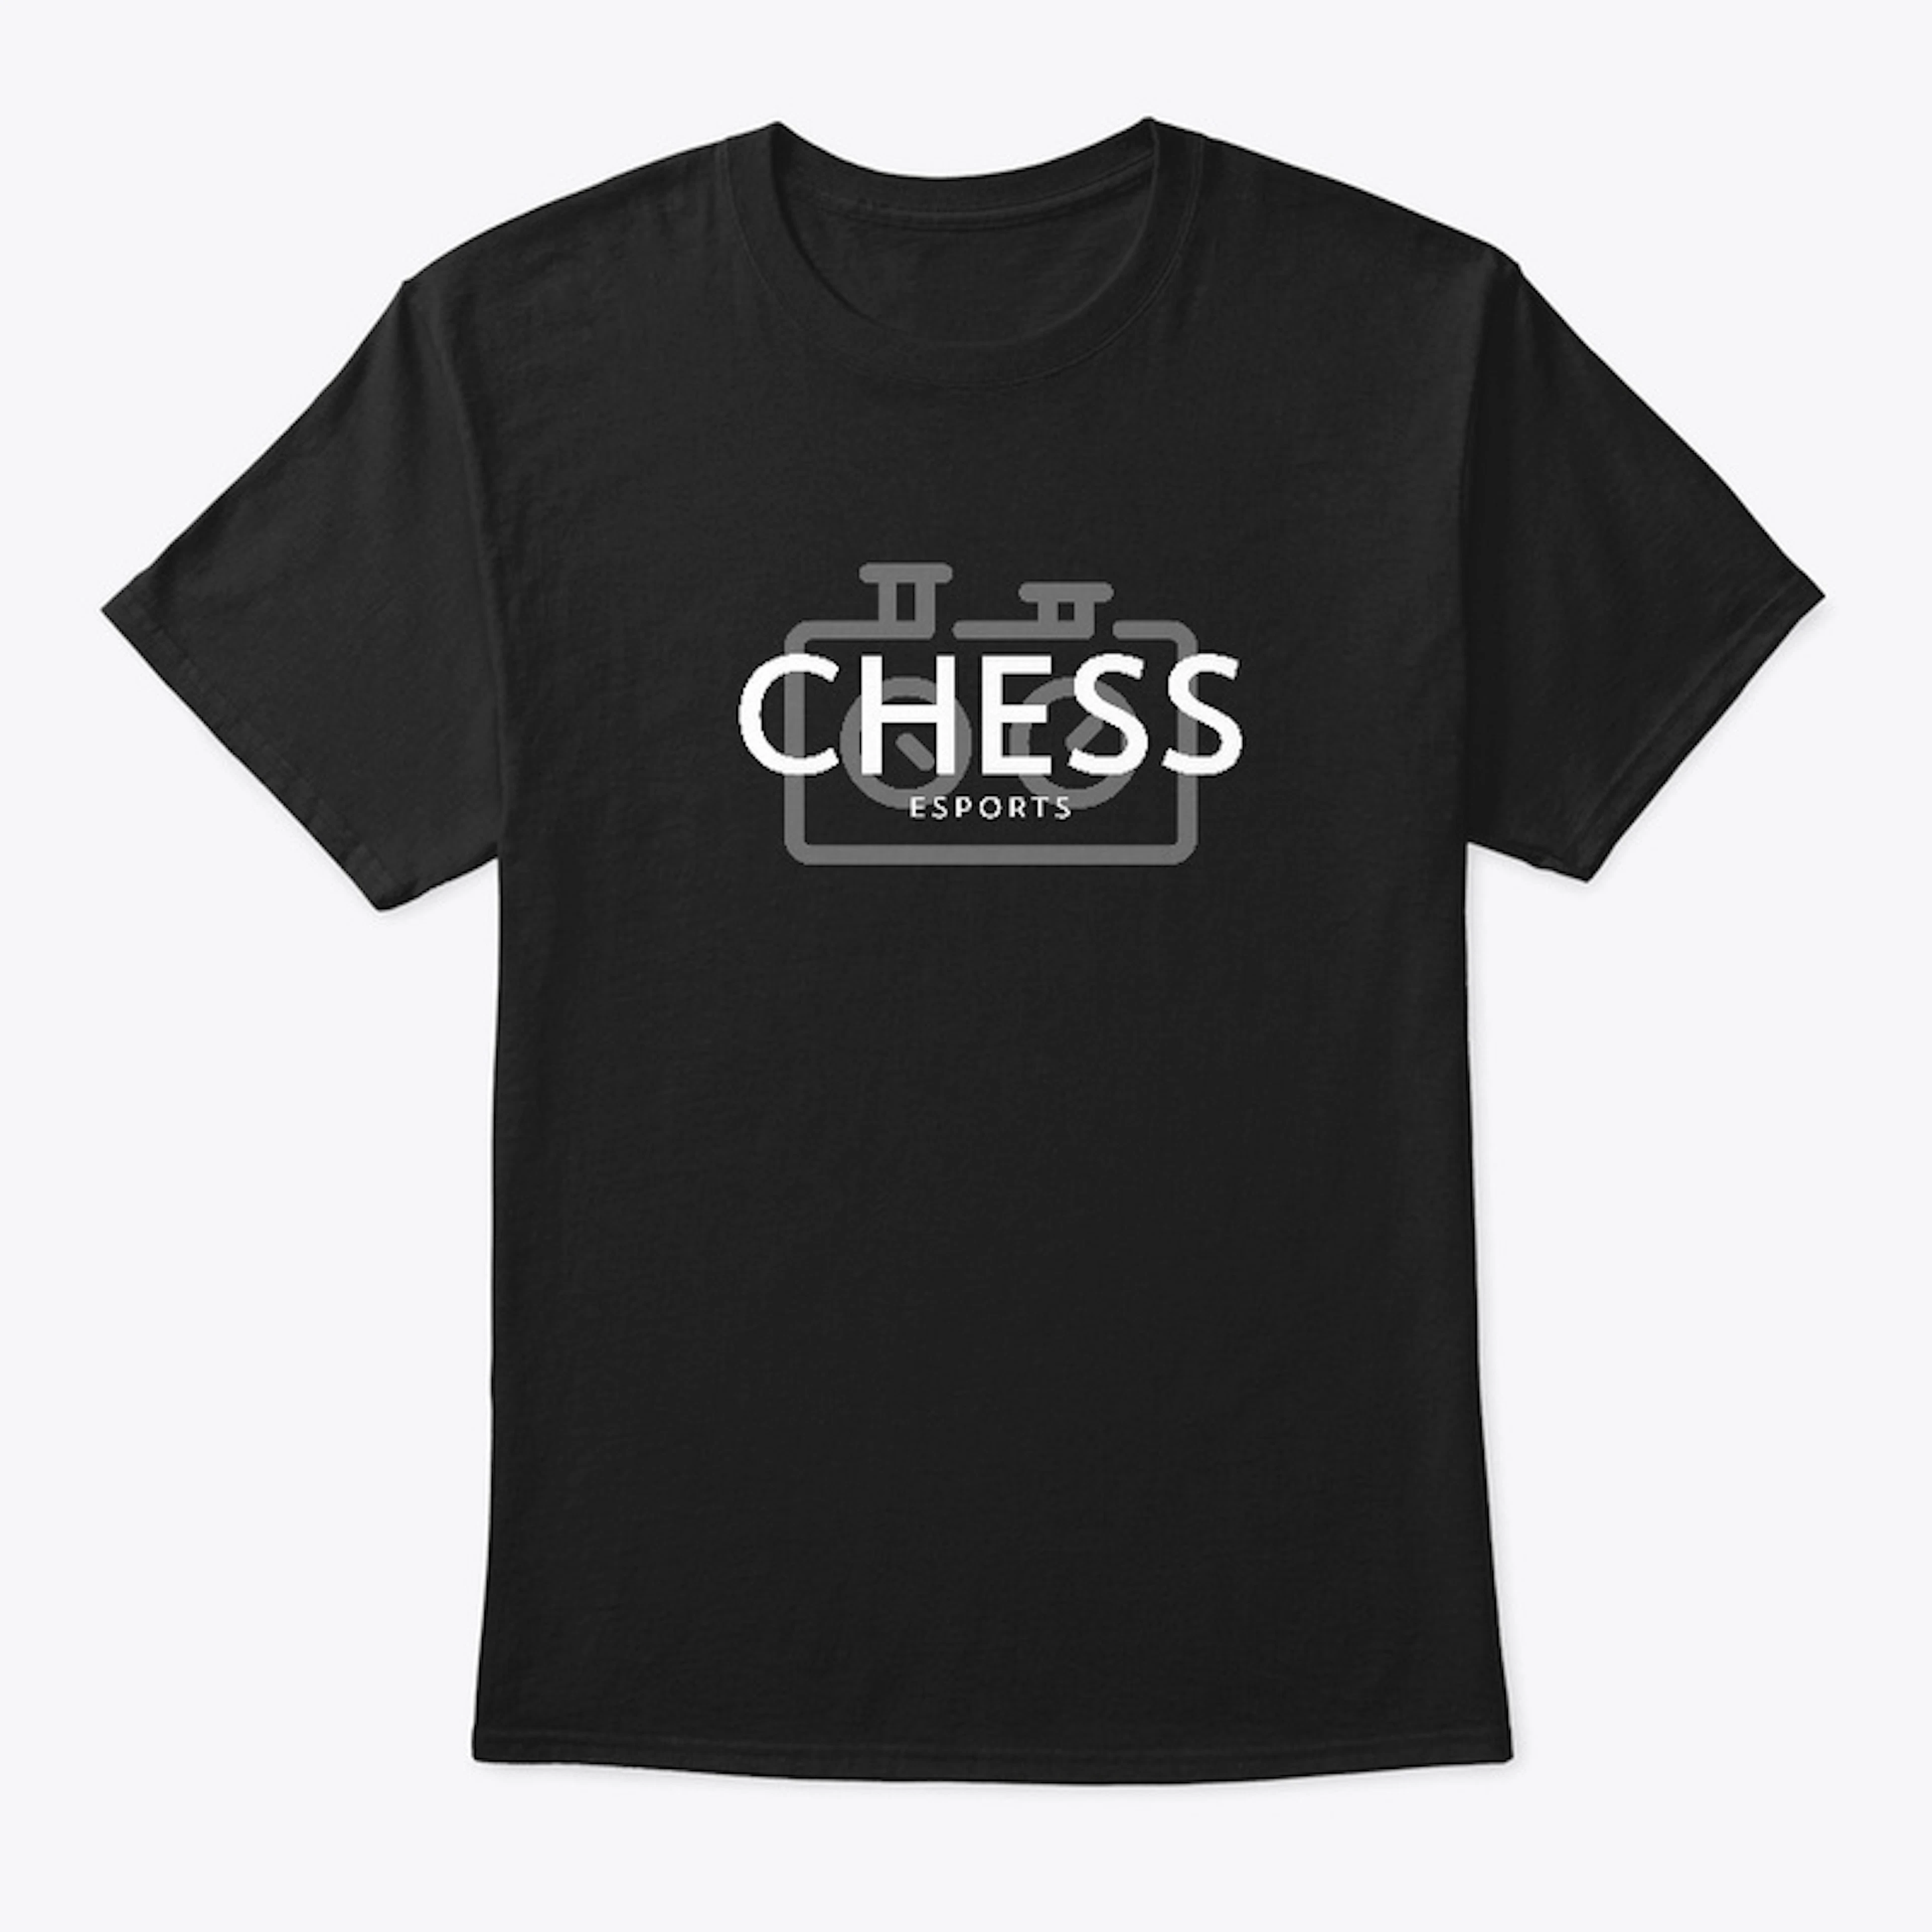 Chess Esports